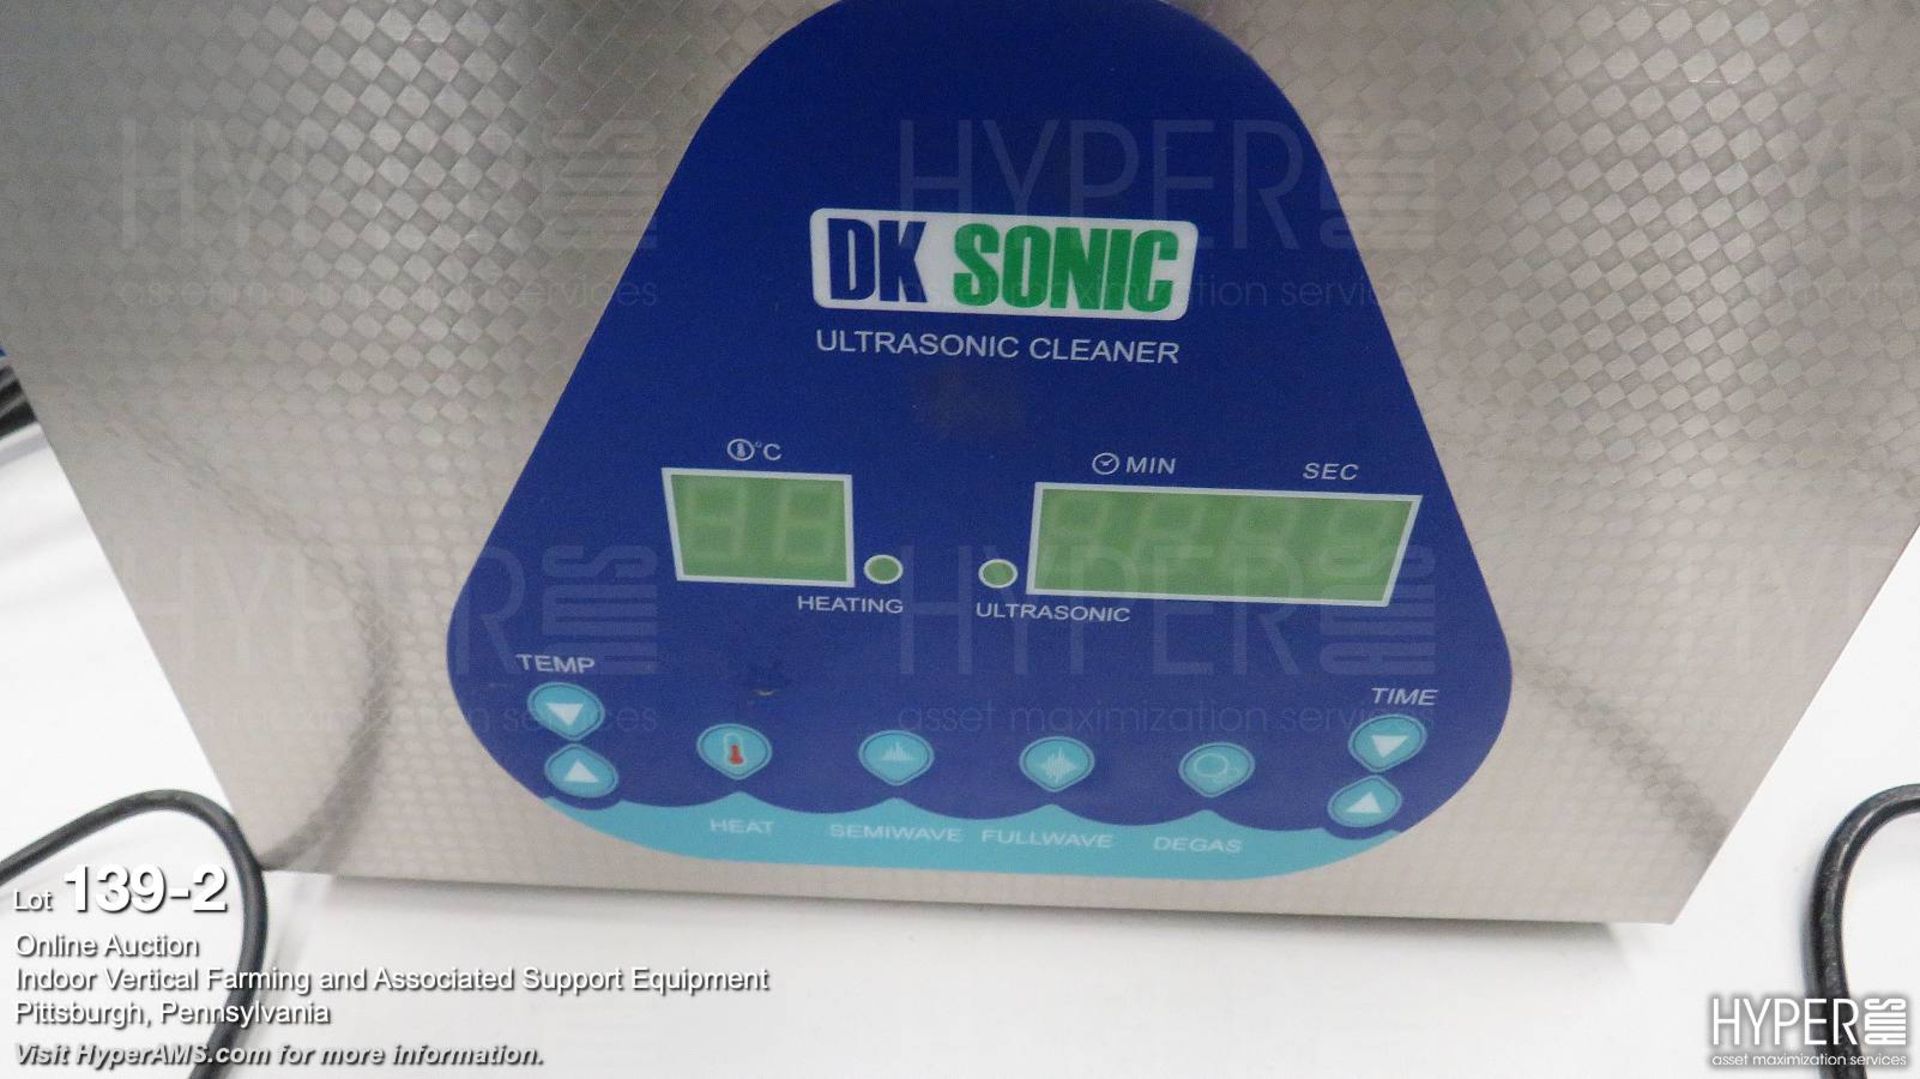 DK Sonic ultrasonic cleaner - Image 2 of 3